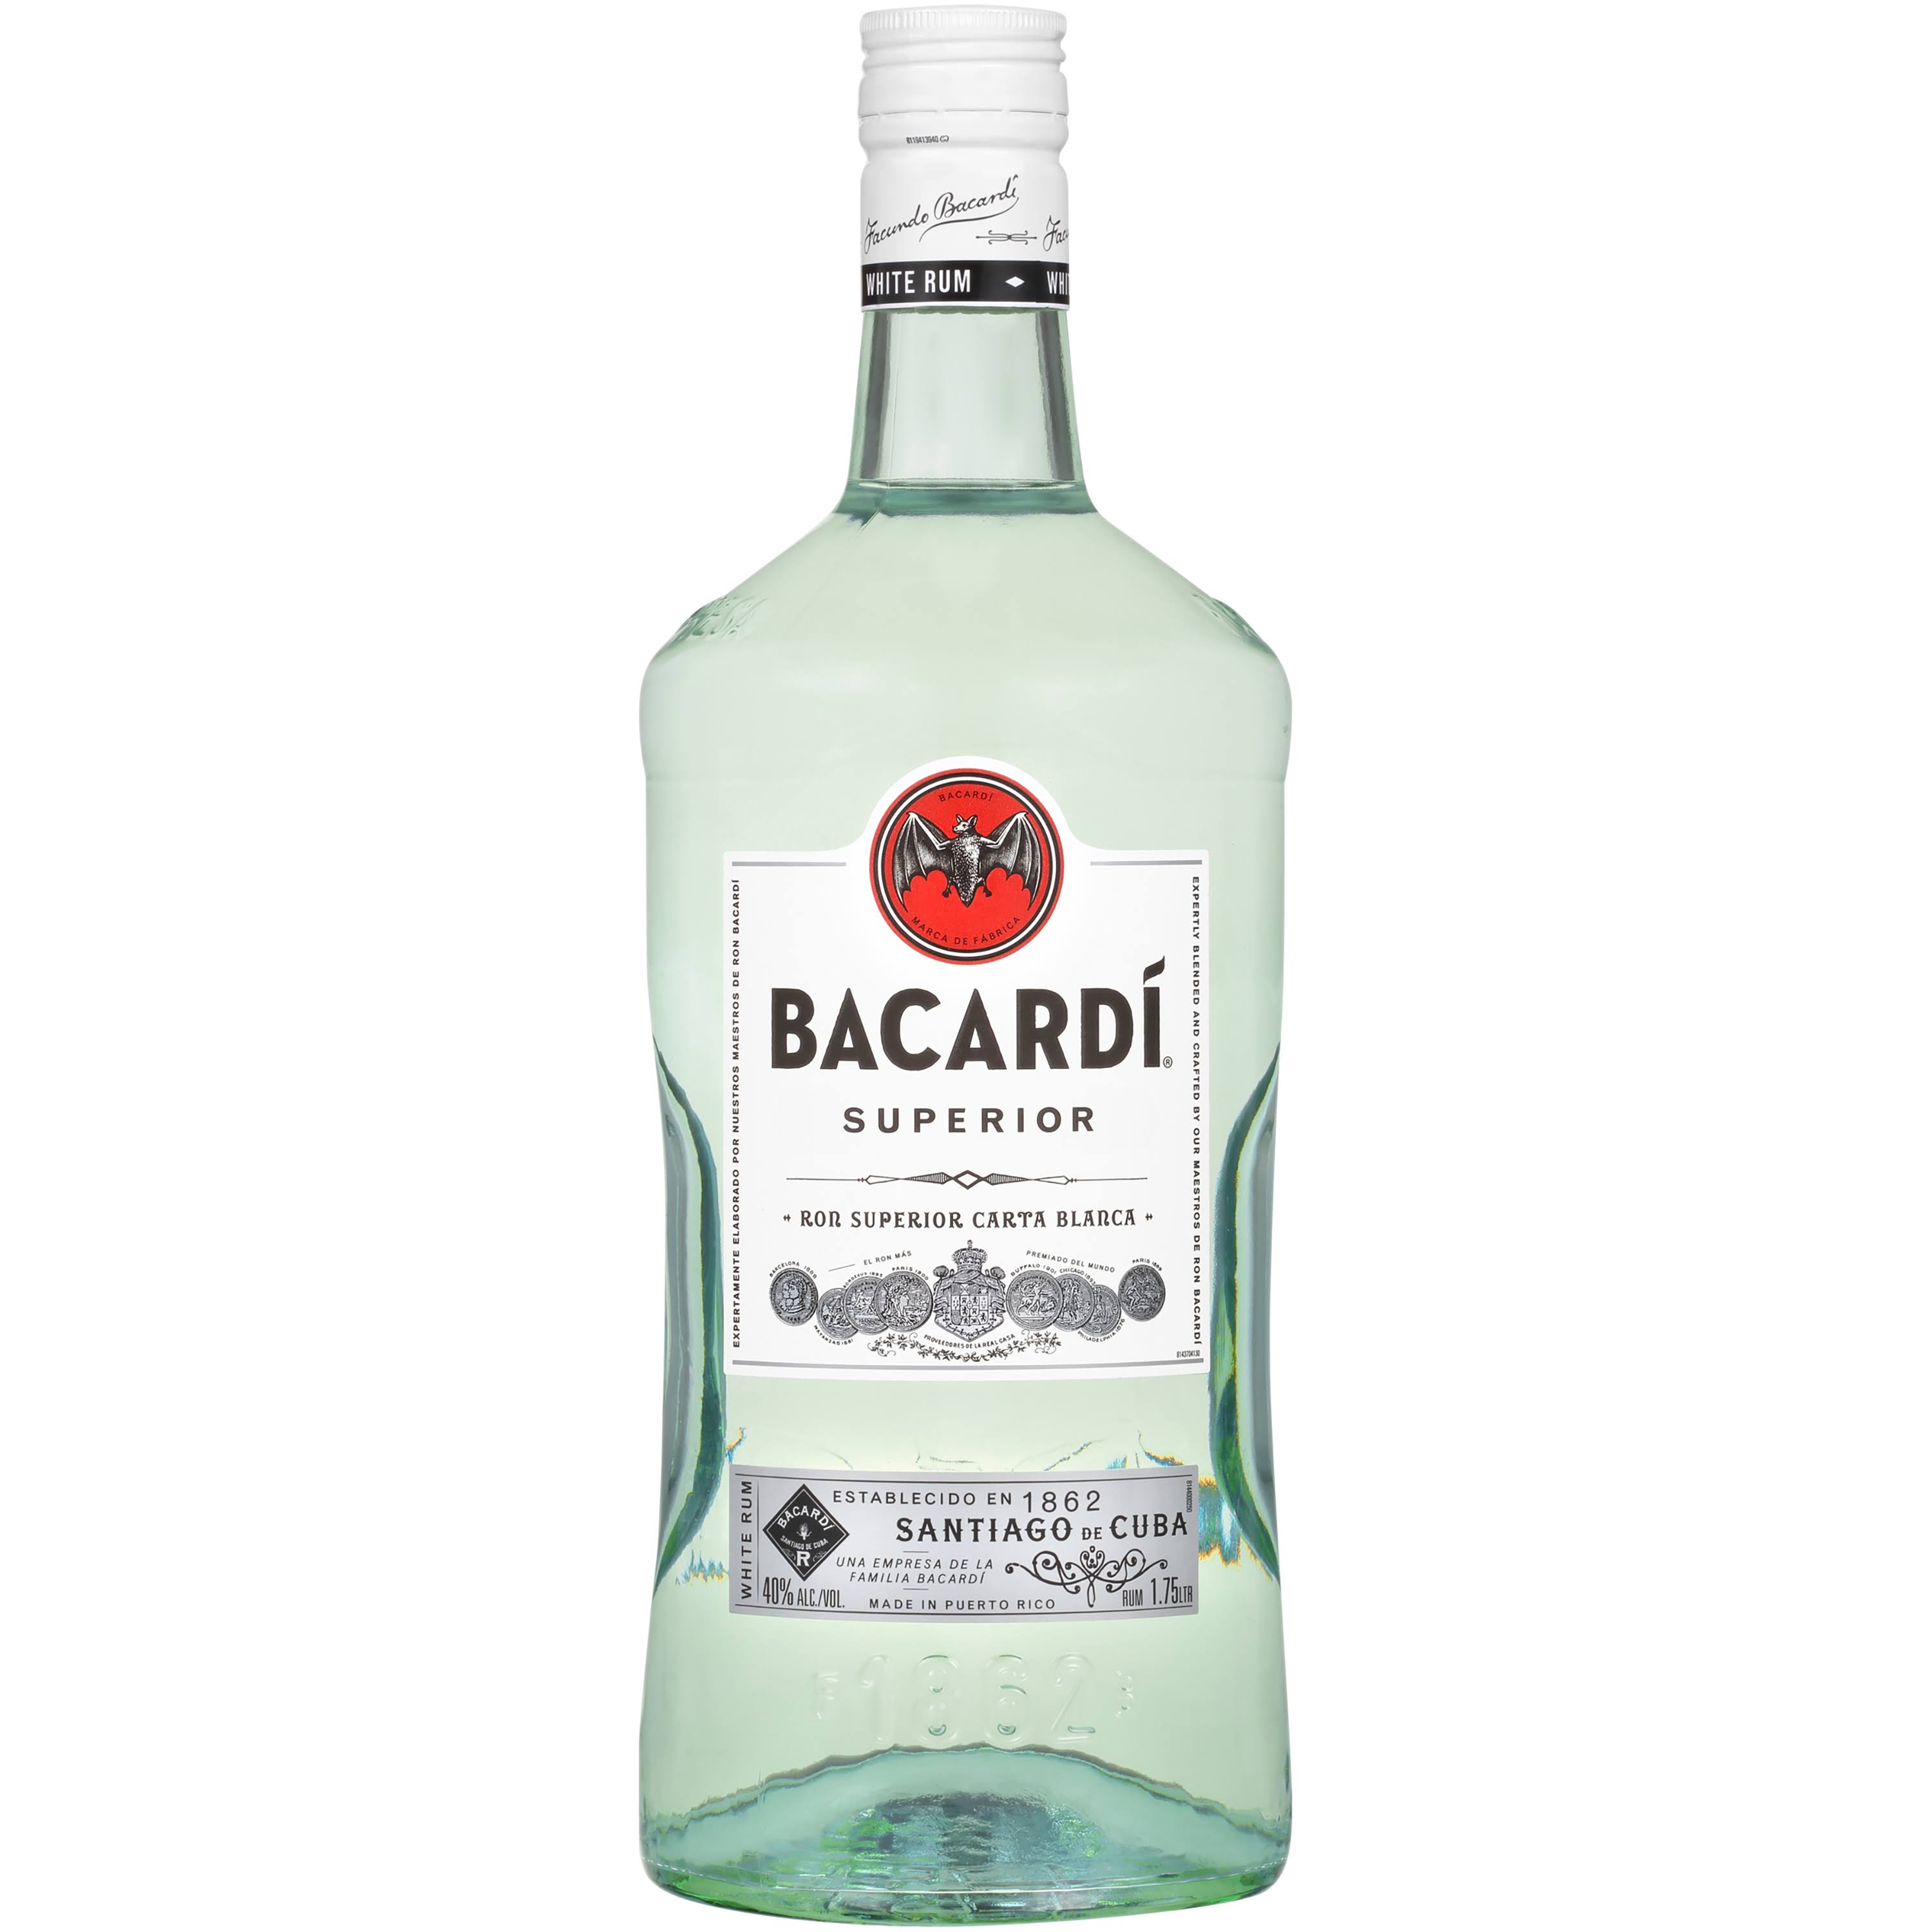 Bacardi Superior Rum - 1.75 L bottle